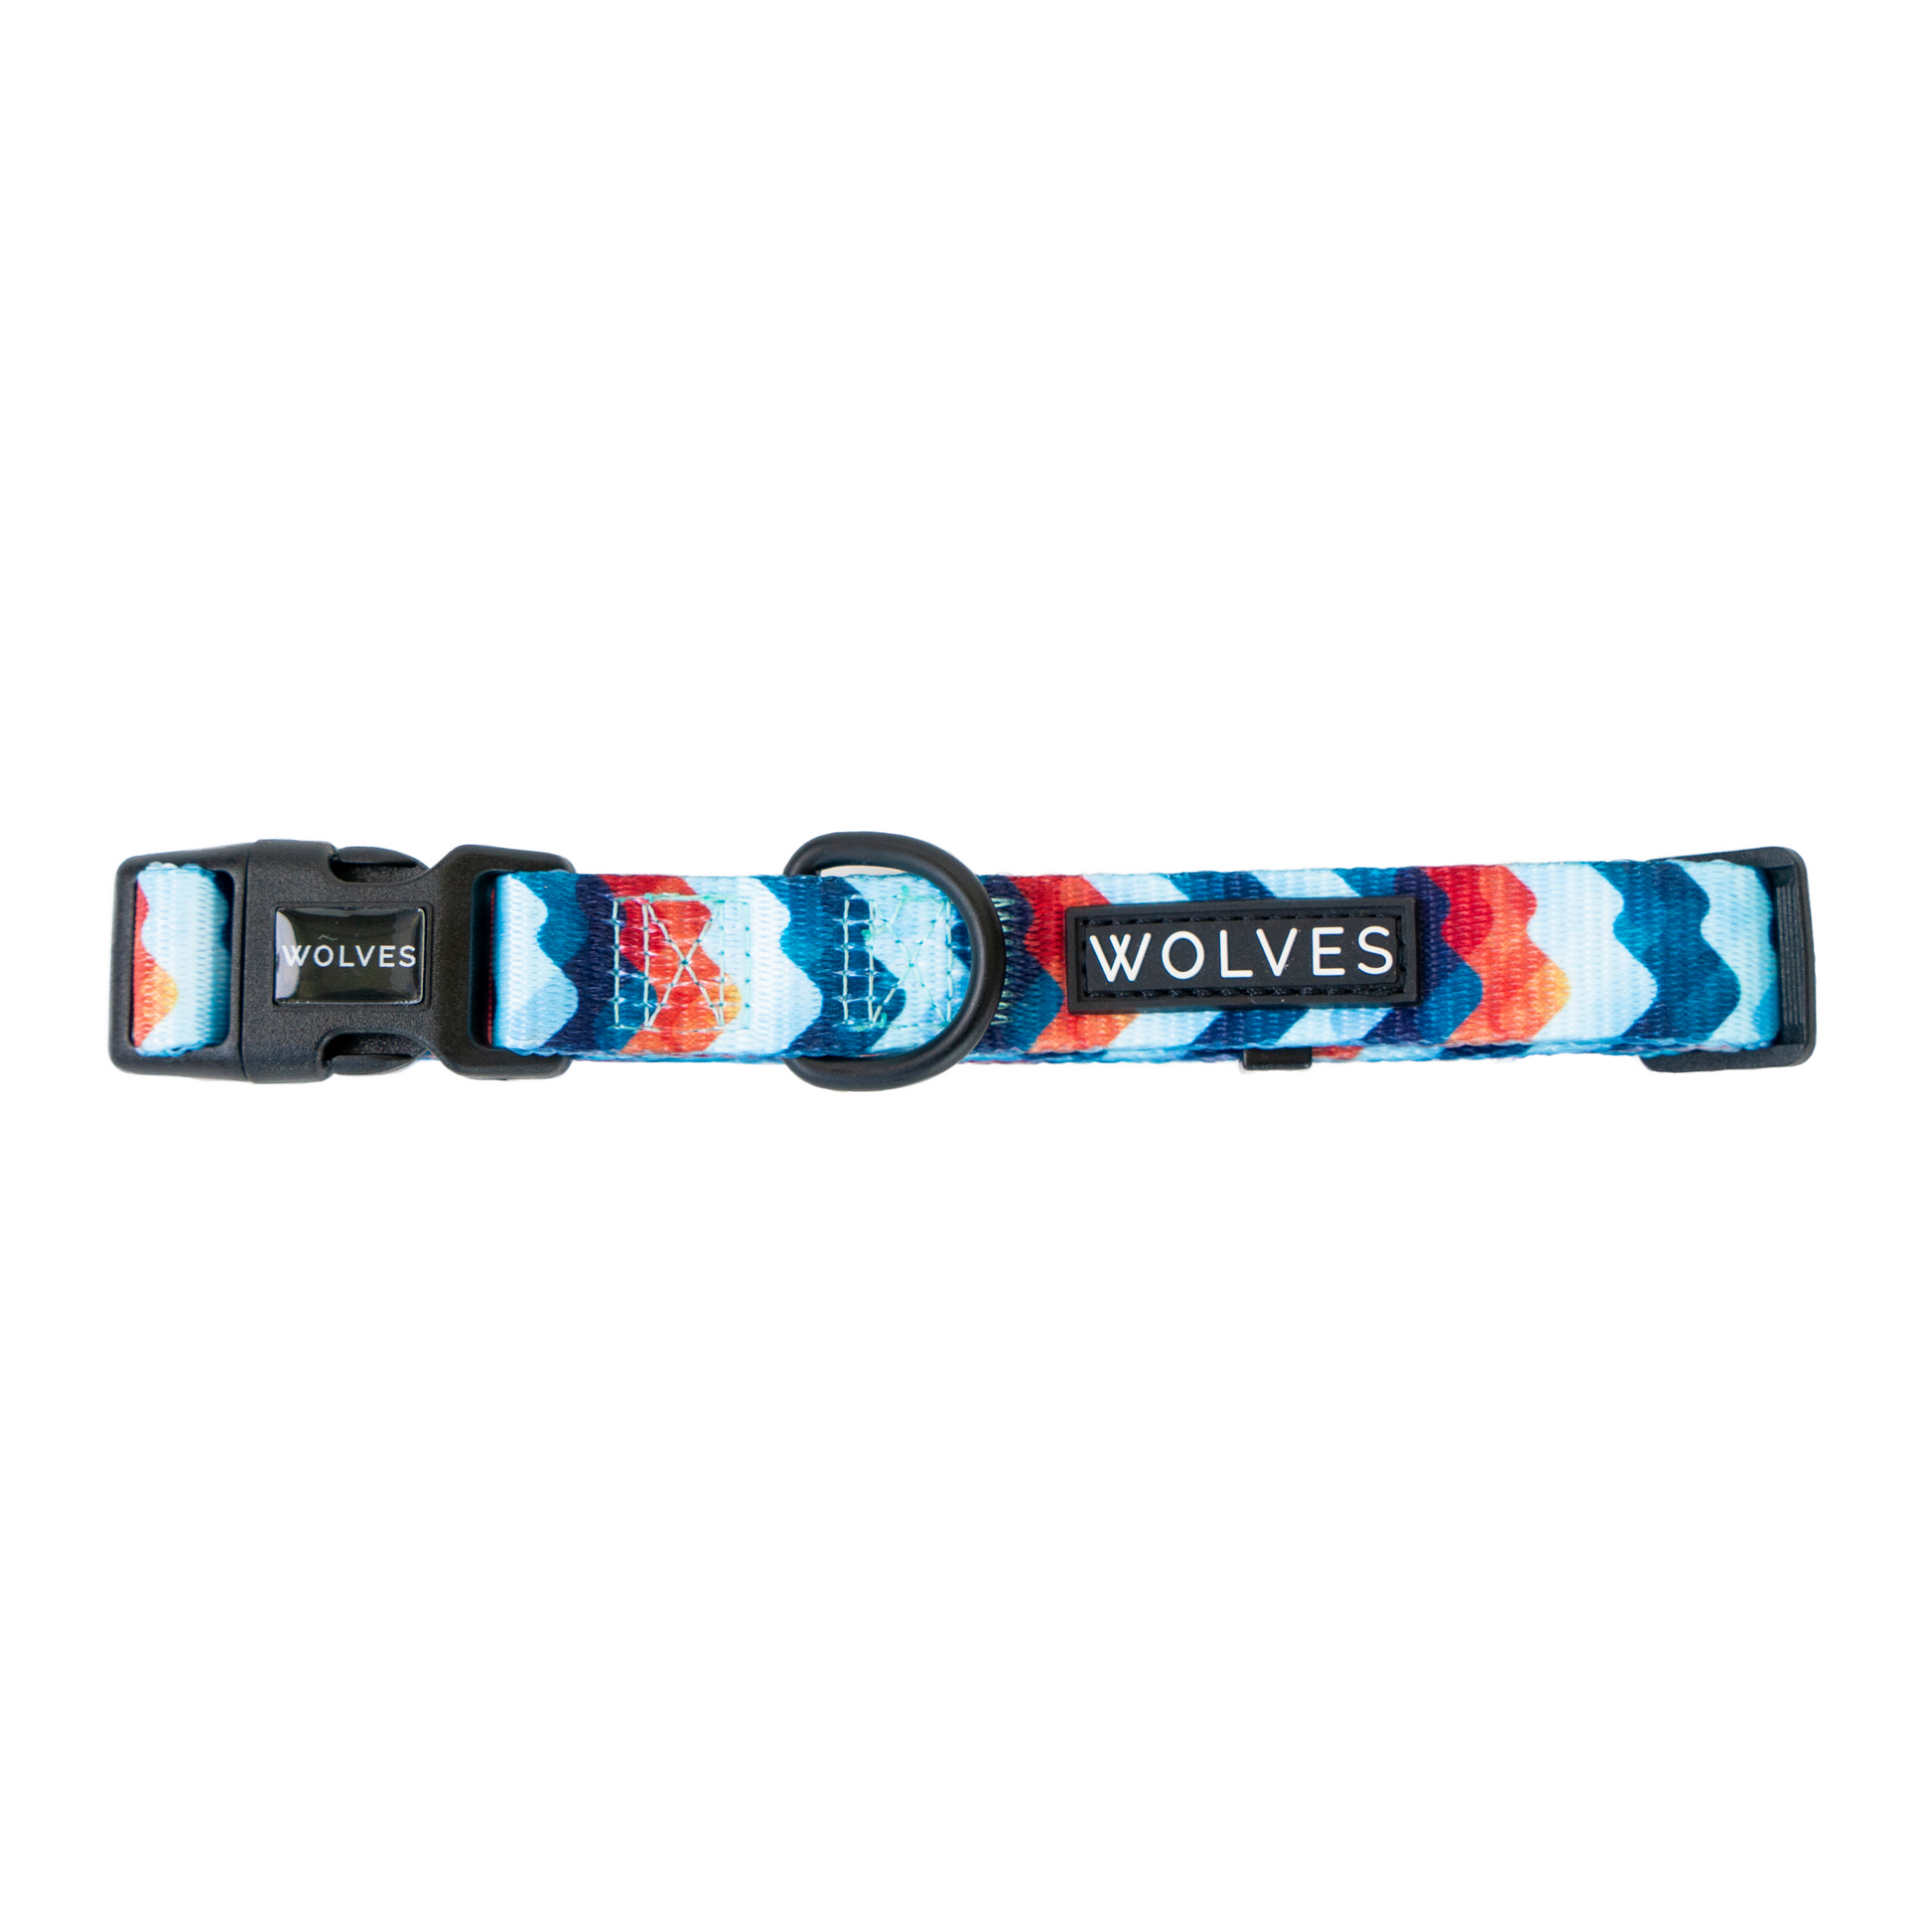 Blue and orange wave patterned dog collar with "Wolves" logo.